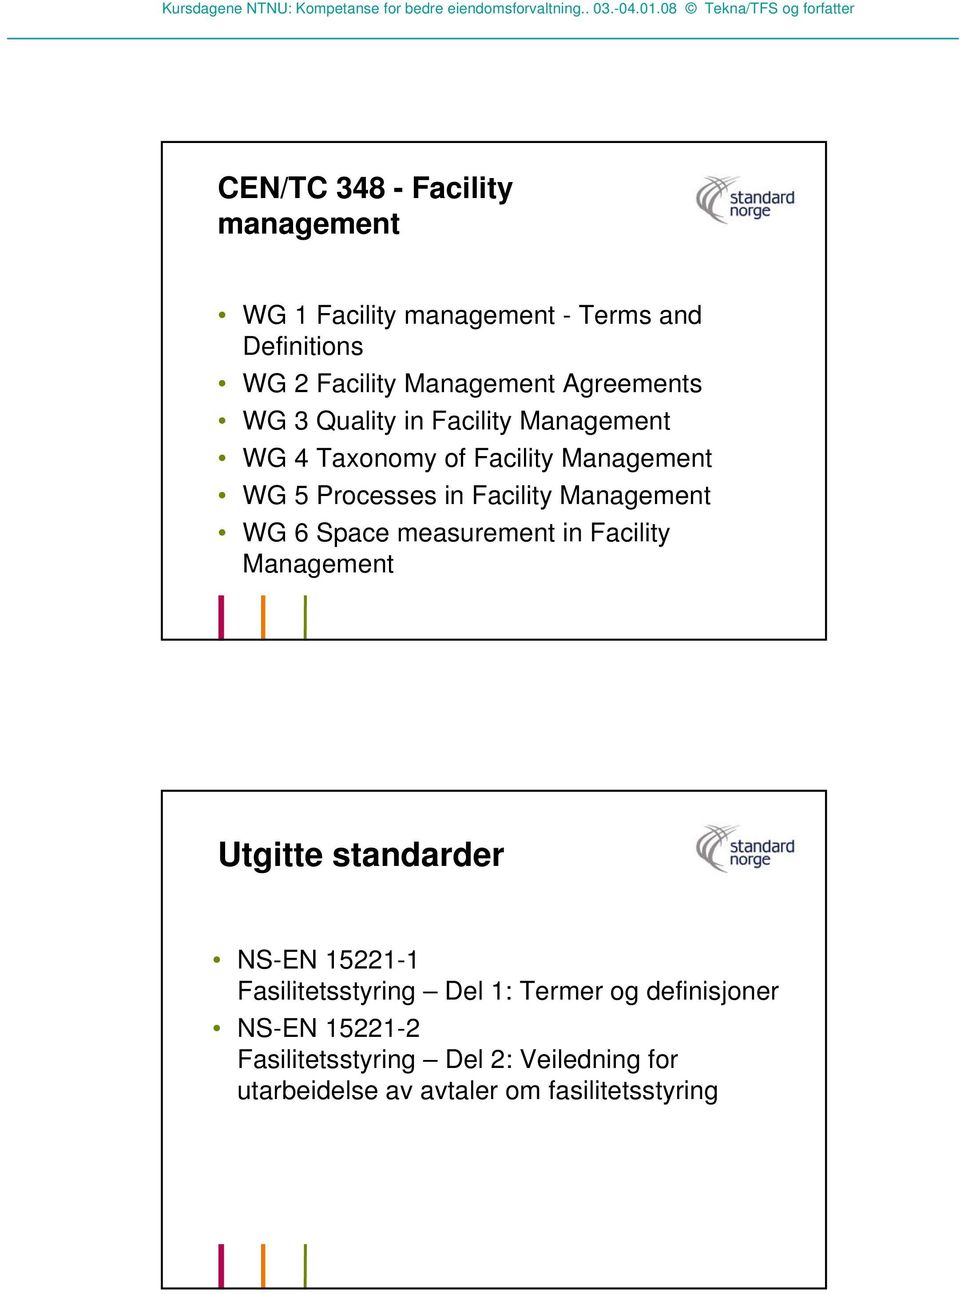 Management WG 6 Space measurement in Facility Management Utgitte standarder NS-EN 15221-1 Fasilitetsstyring Del